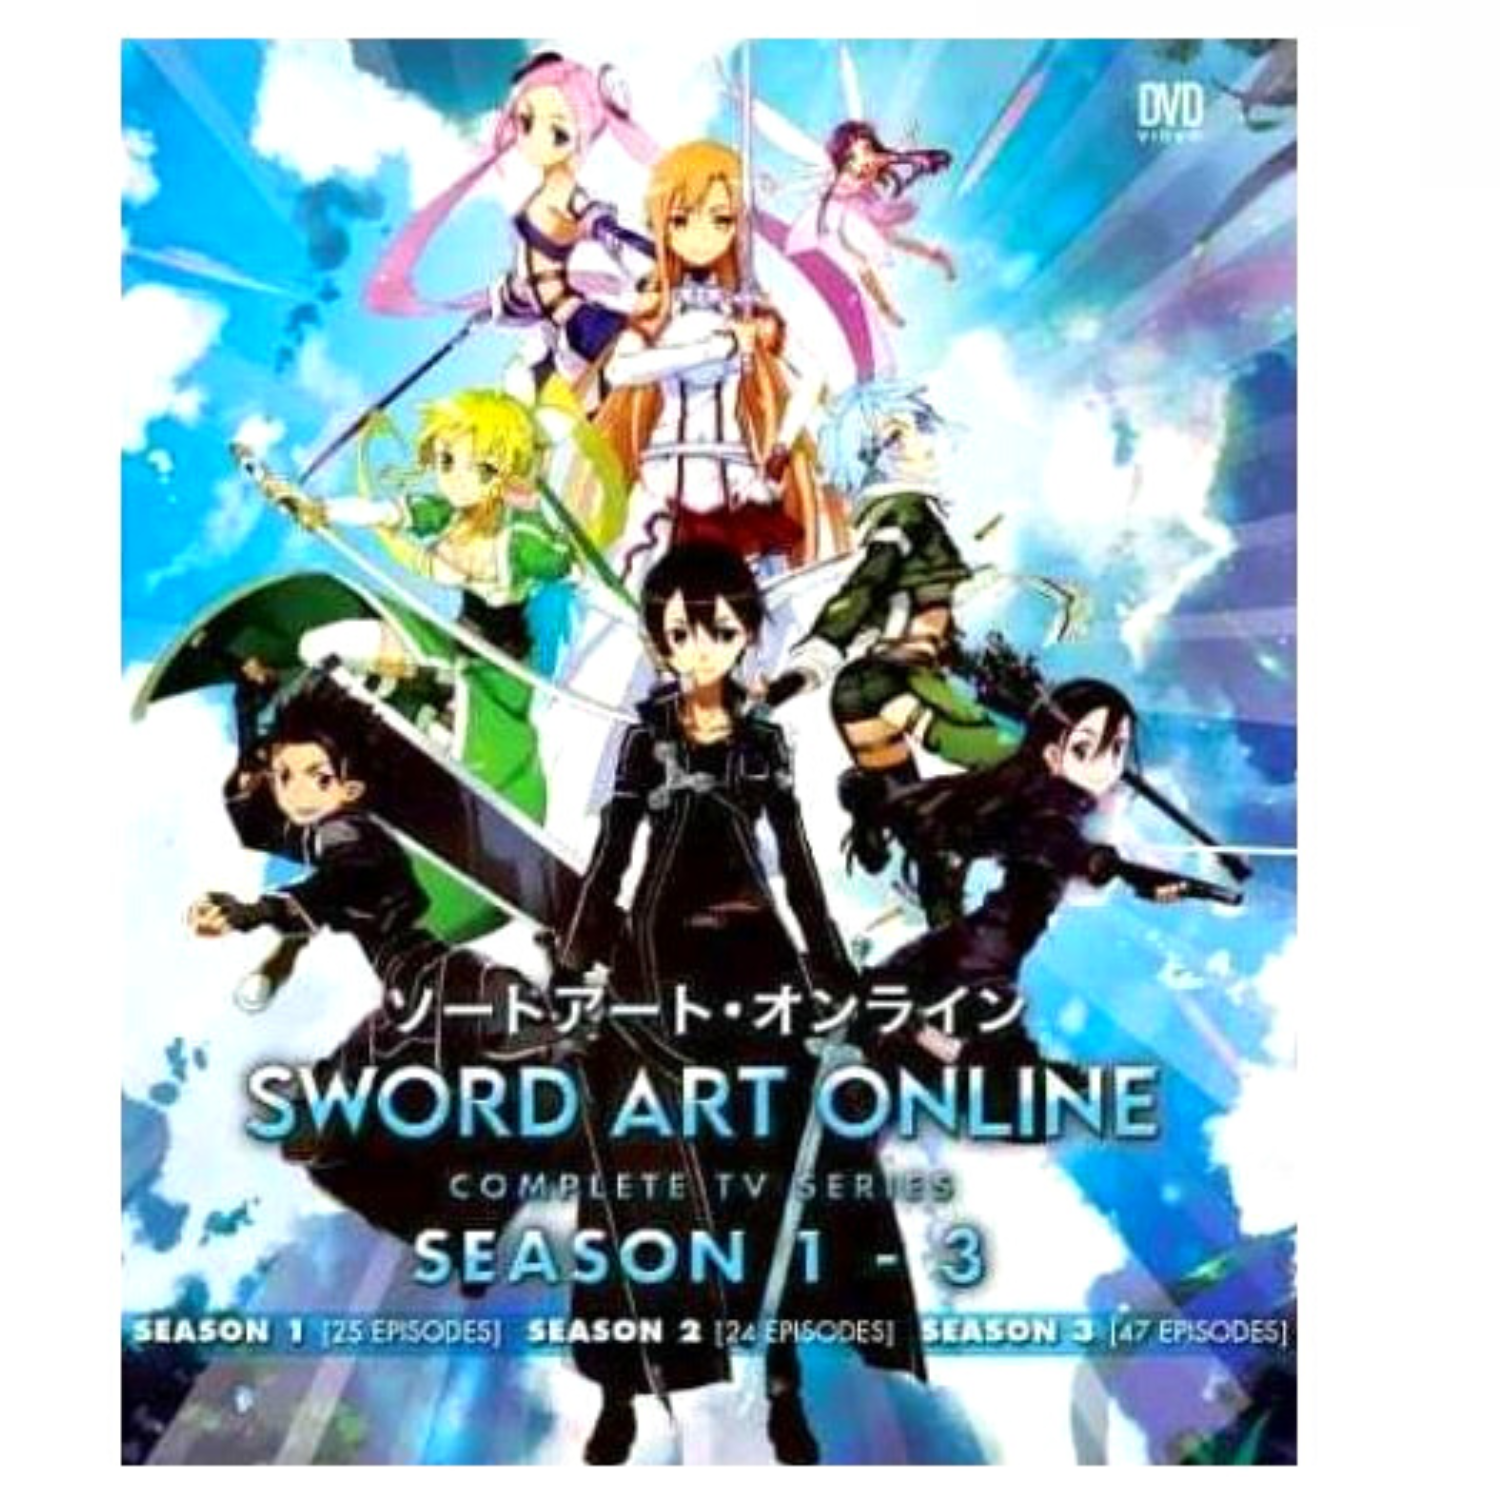 Anime Sword - The Best Anime Swords, Anime Knife, Anime Weapons Store